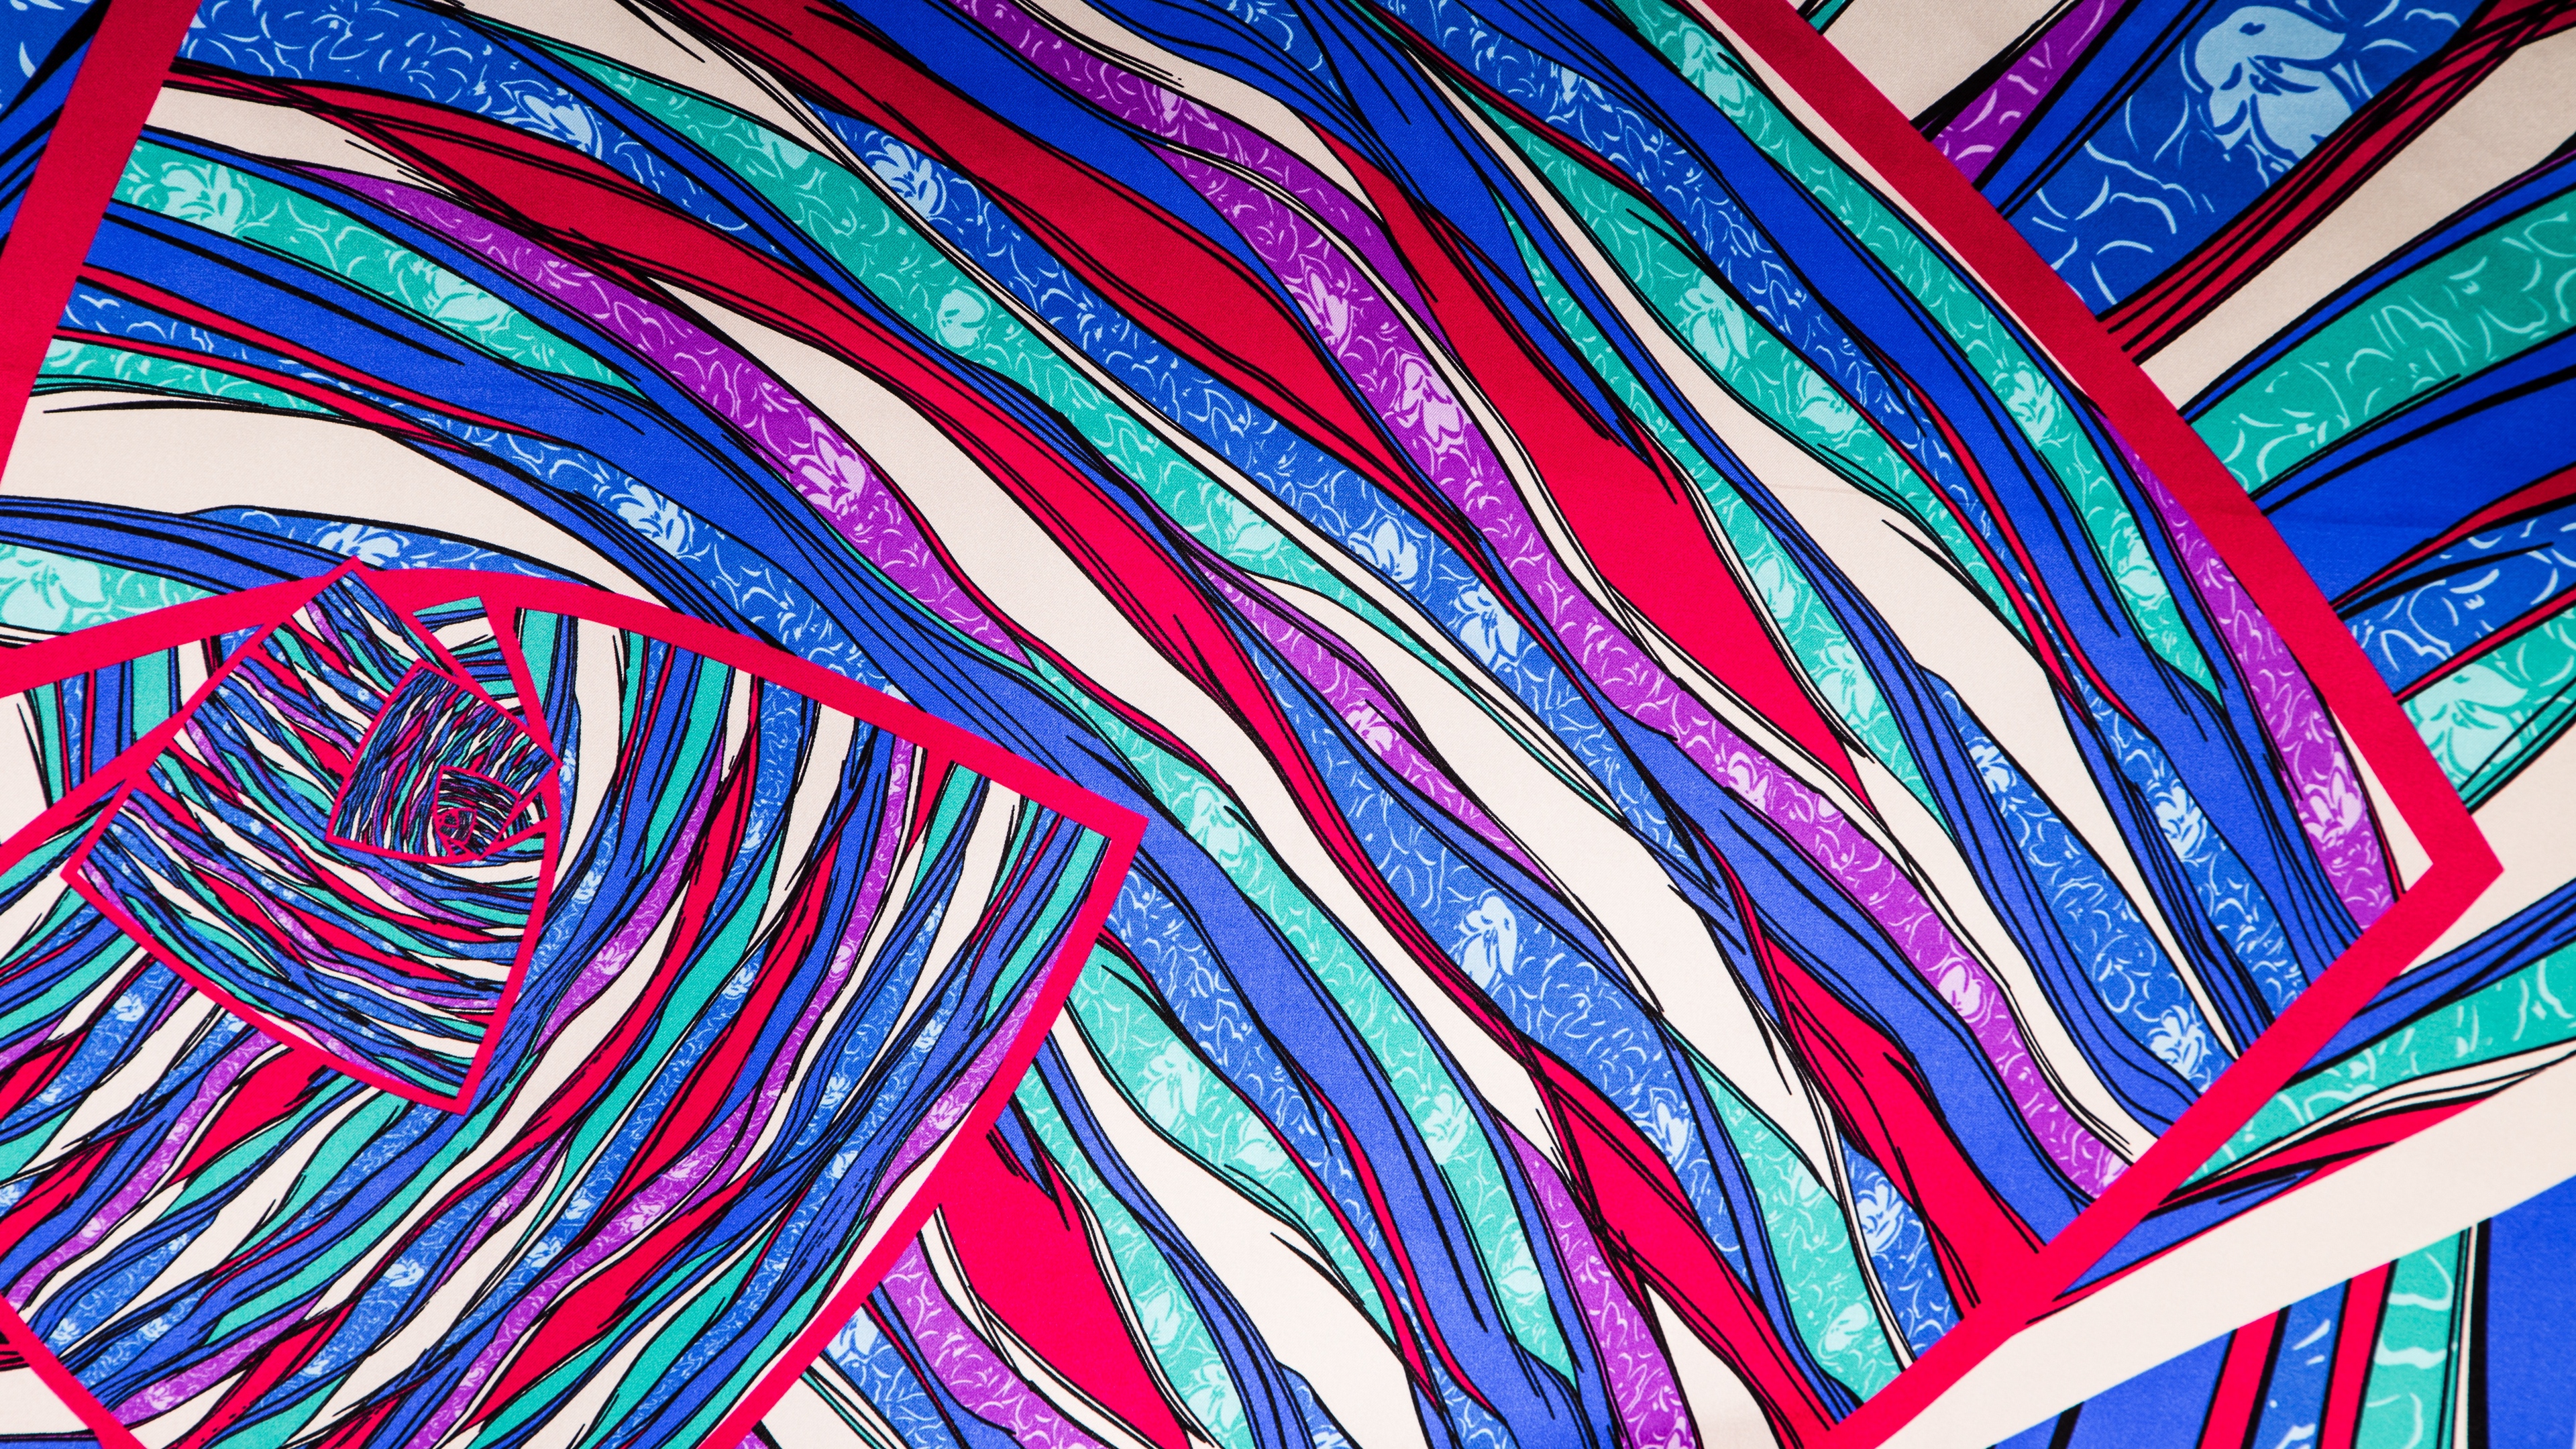 lines stripes art surface 4k 1539369441 - lines, stripes, art, surface 4k - Stripes, Lines, art